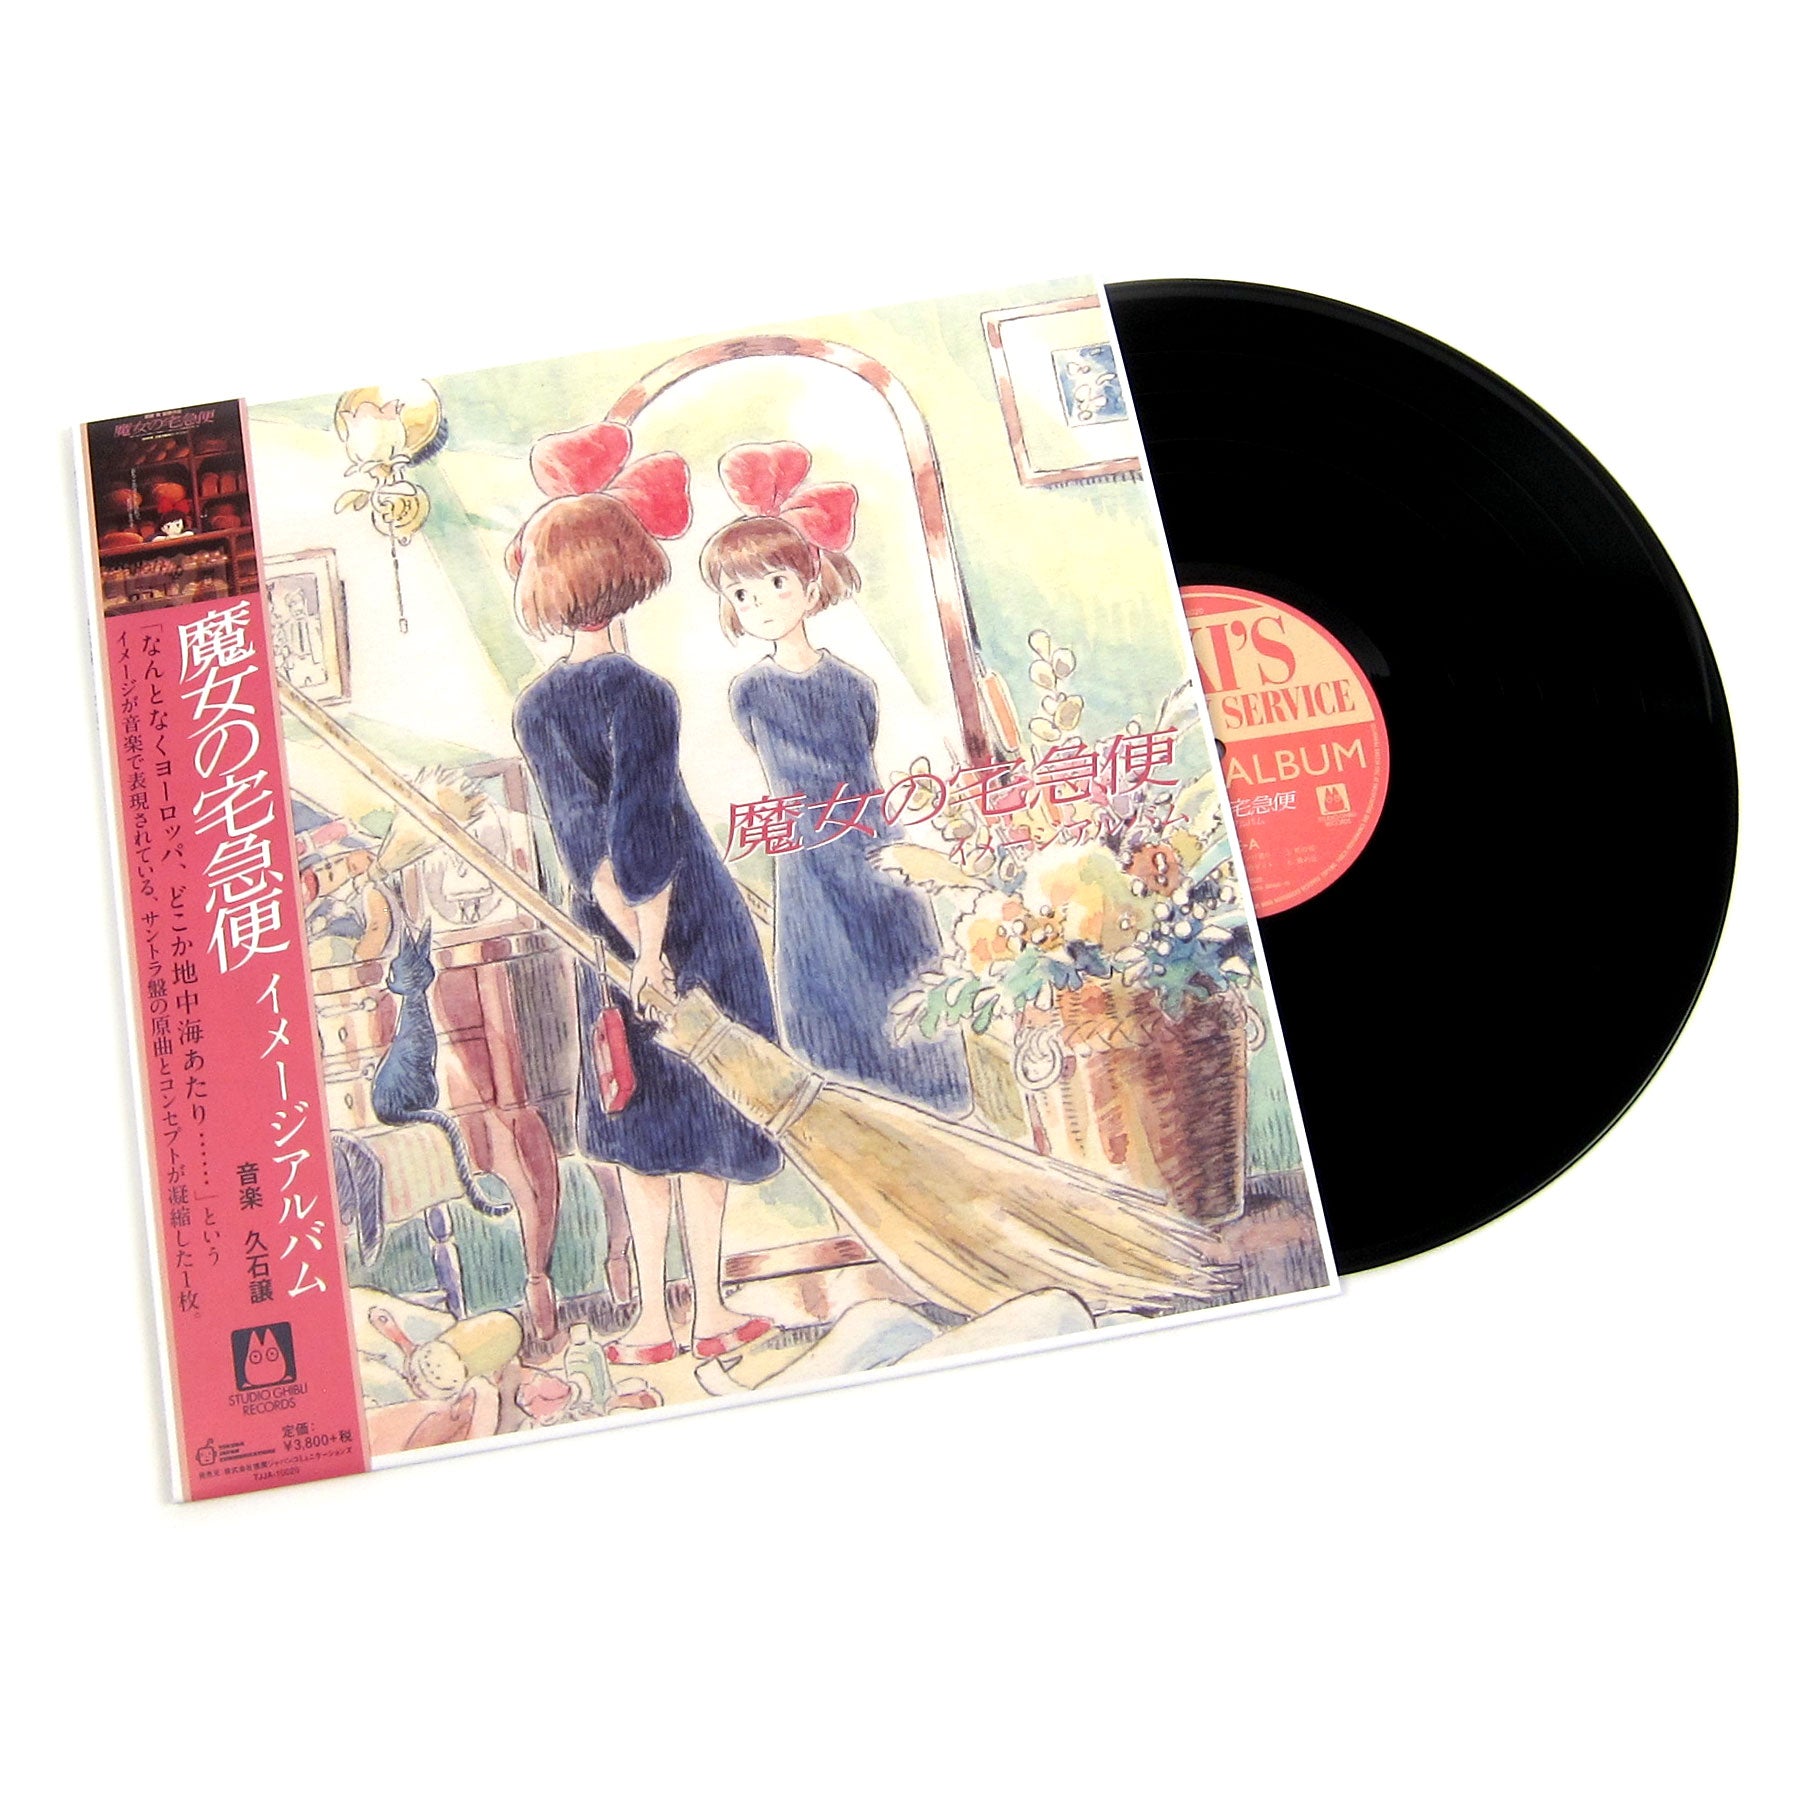 Music Anime Soundtracks Joe Hisaishi Hayao Miyazaki Anime Soundtrack Music The Best Audio Cd